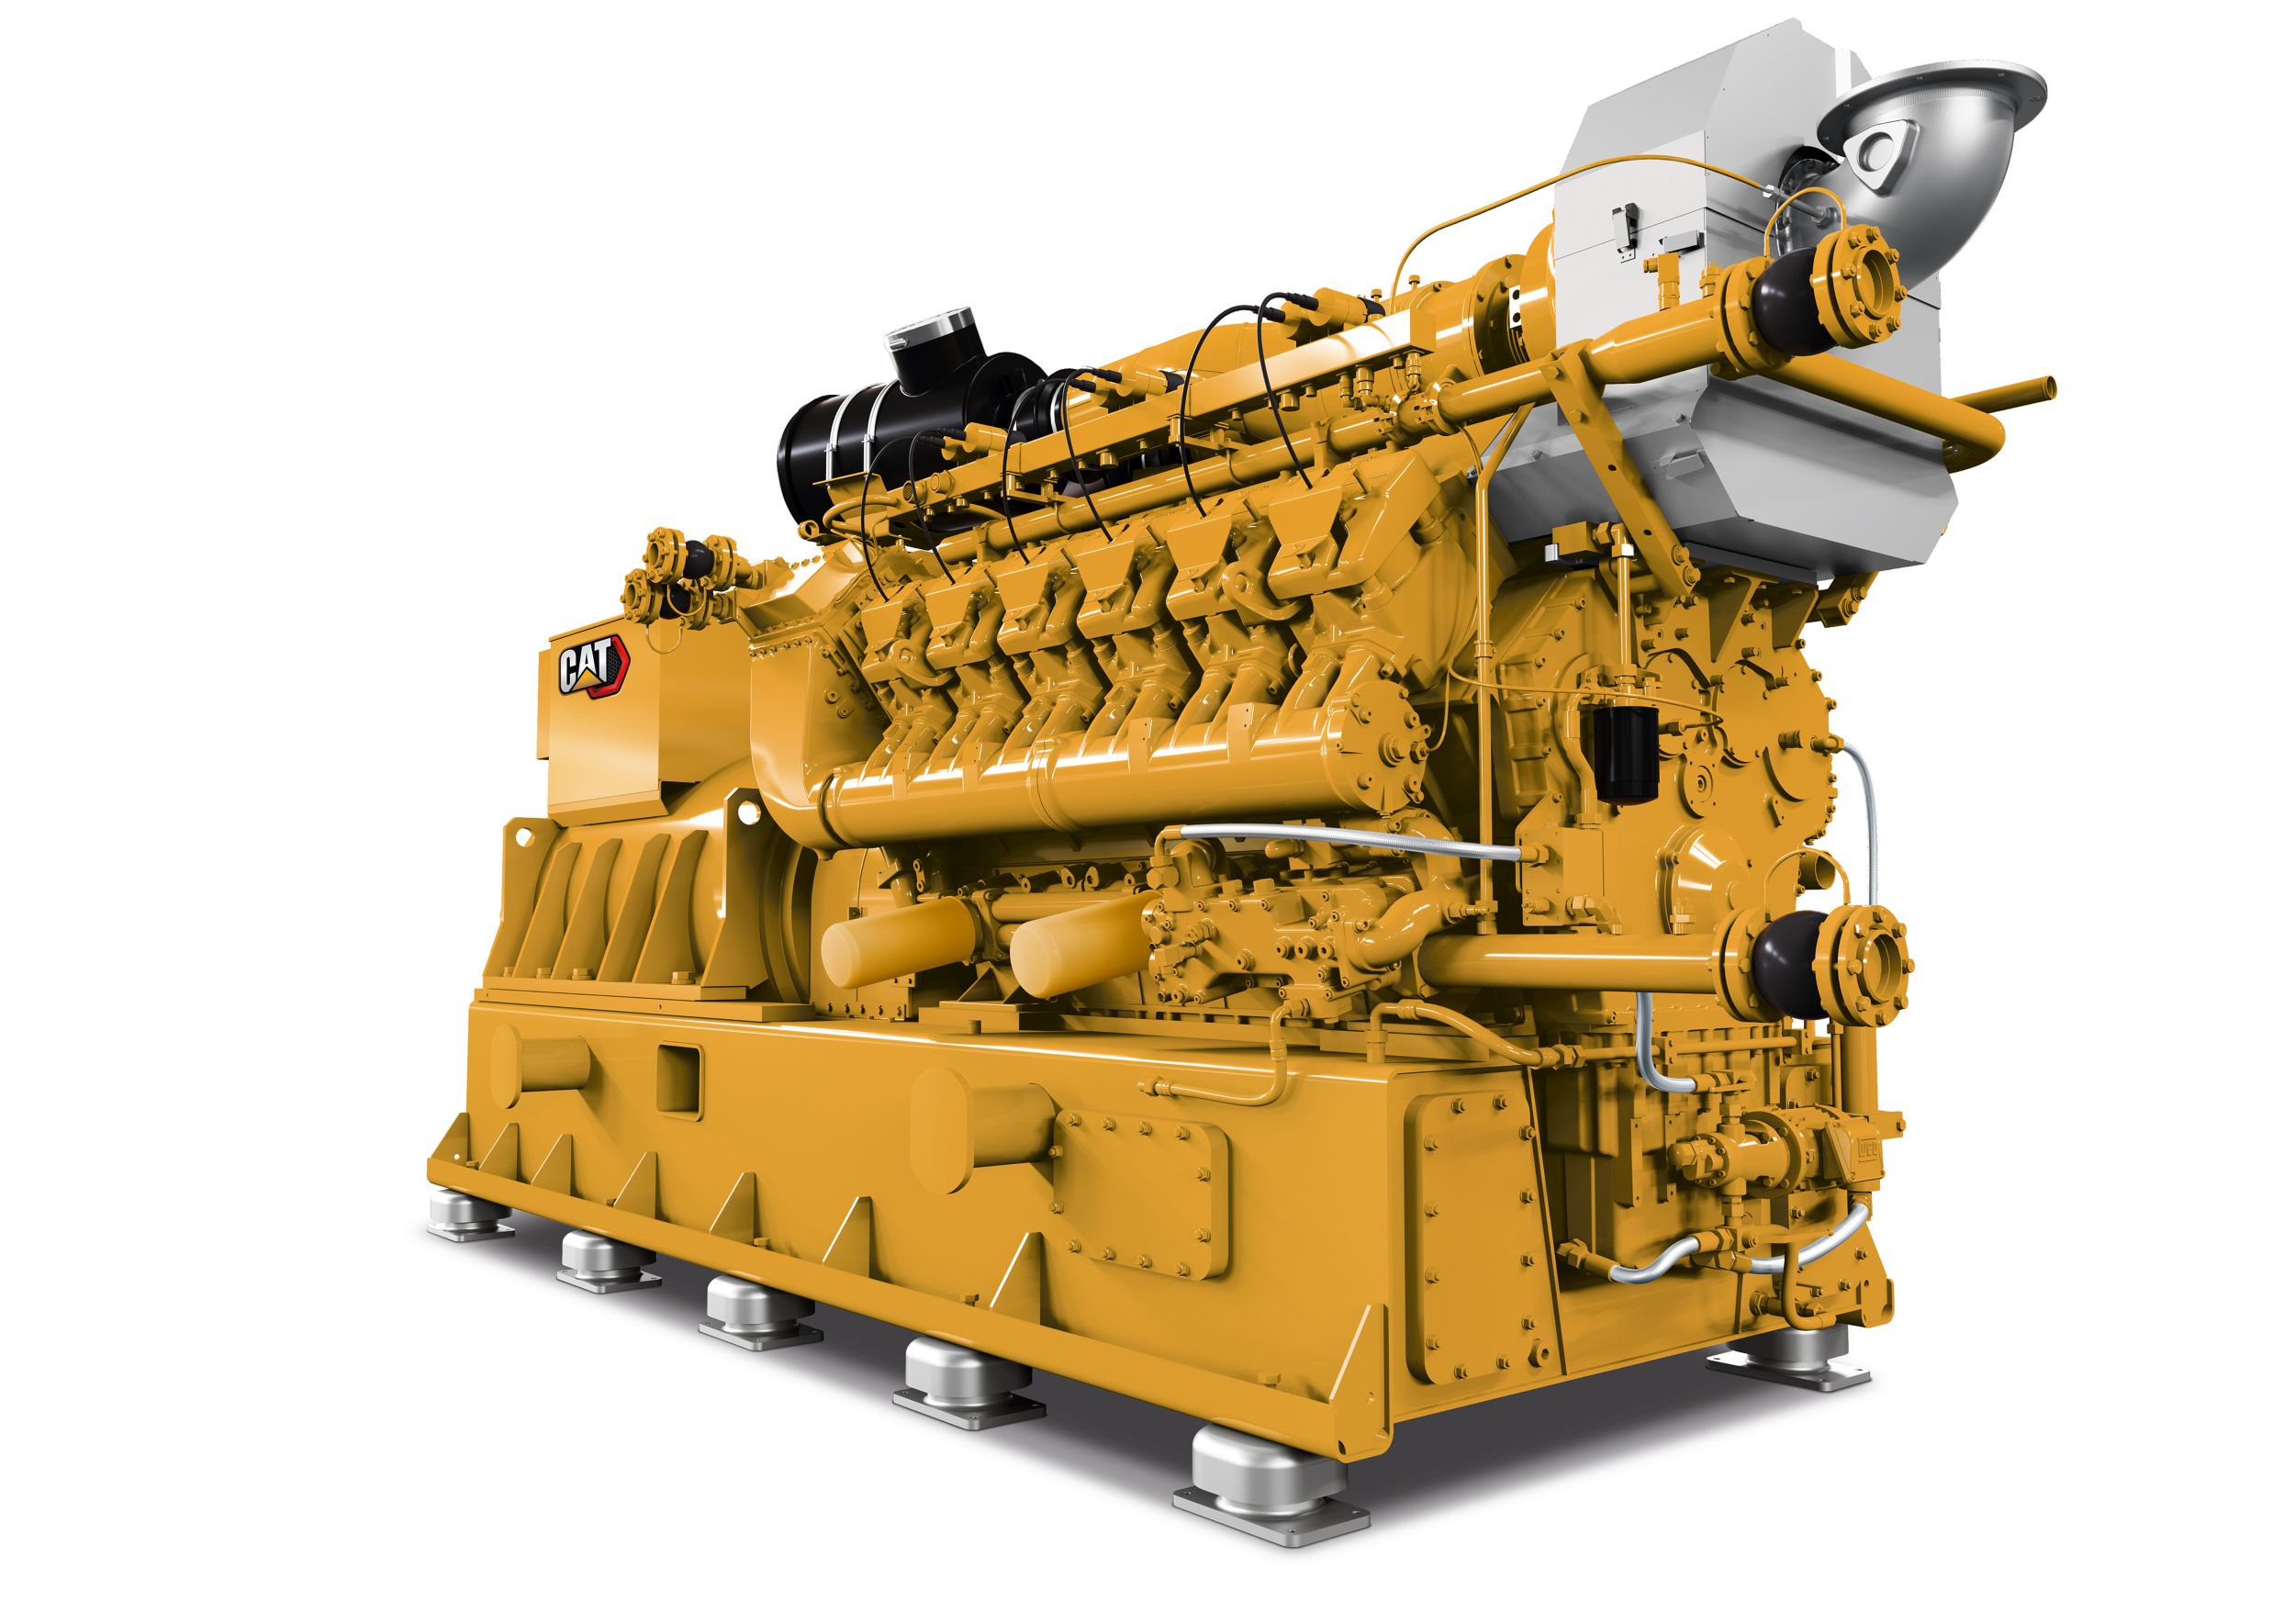 CG170-12 Gas Generator Set